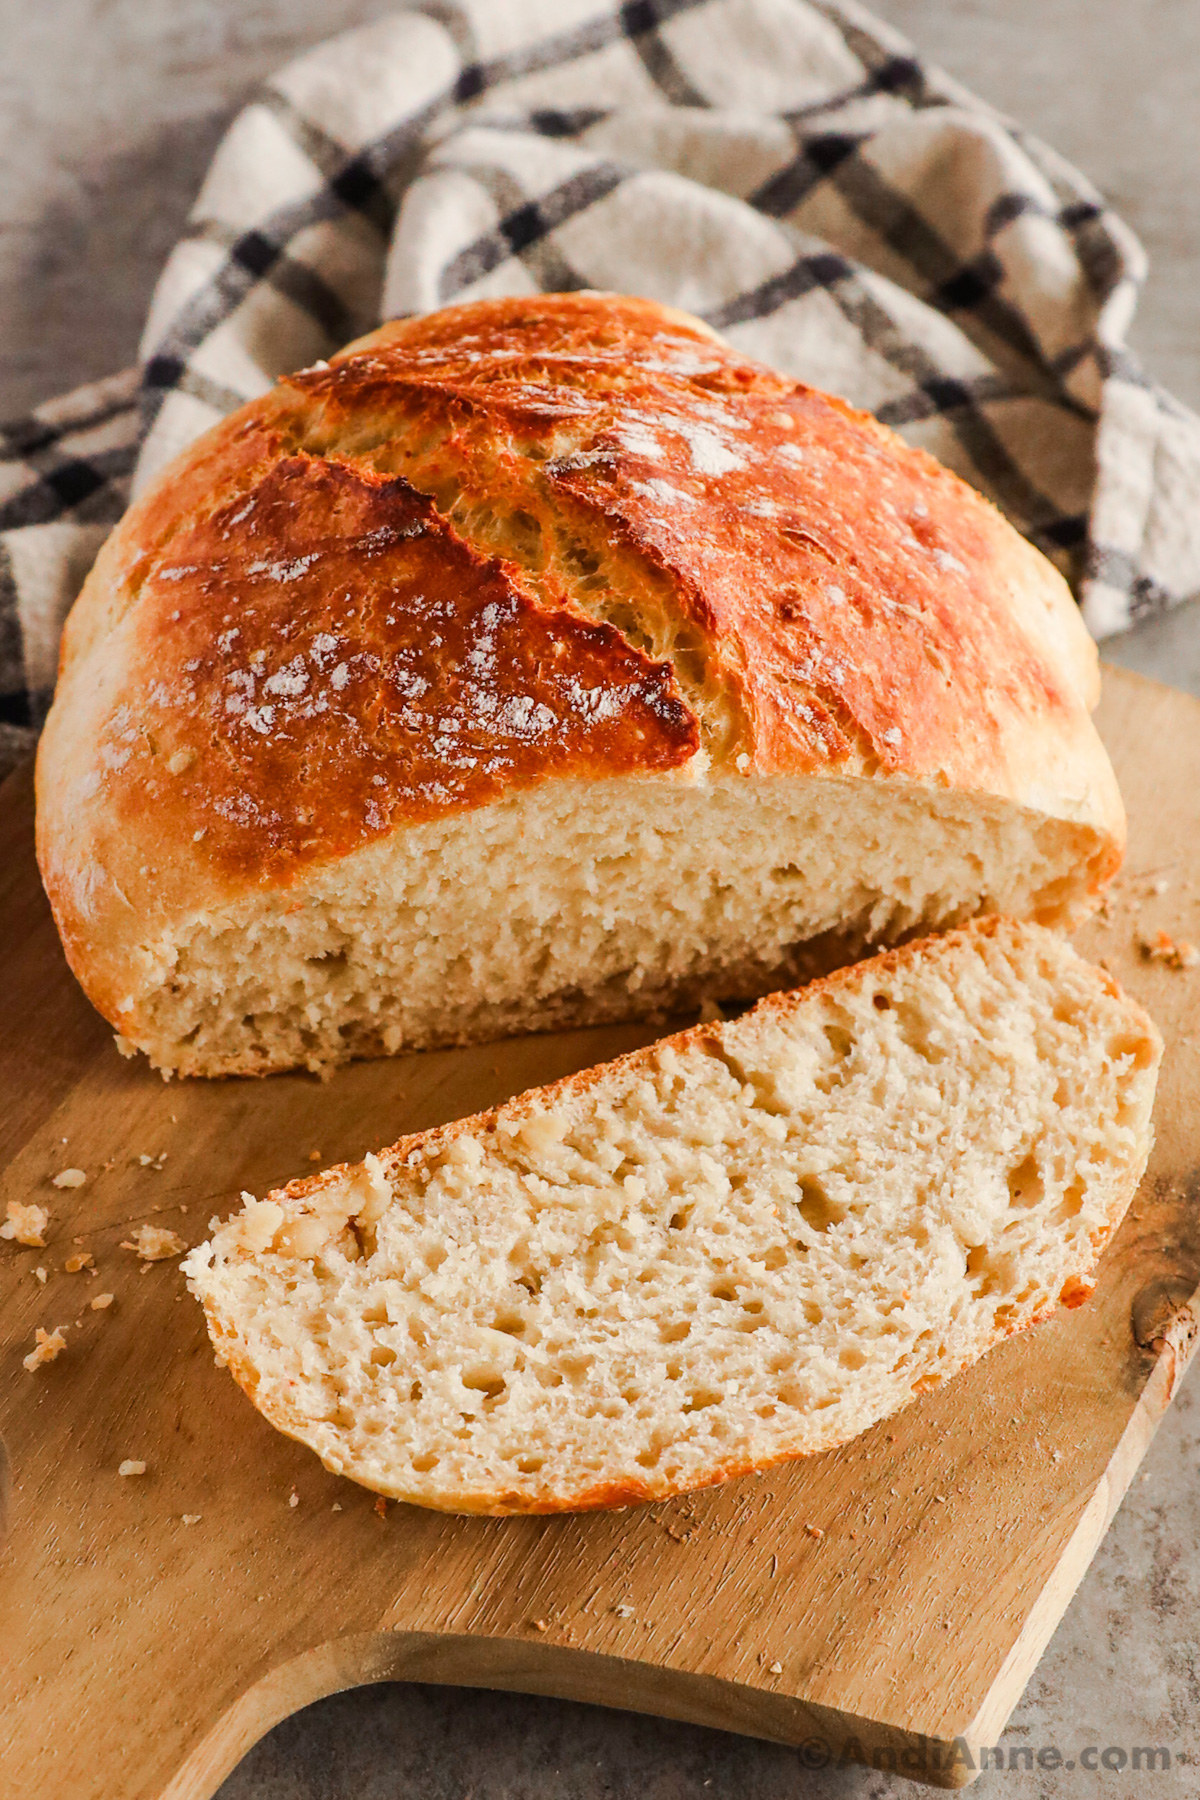 https://andianne.com/wp-content/uploads/2023/01/dutch-oven-bread-02-2.jpg